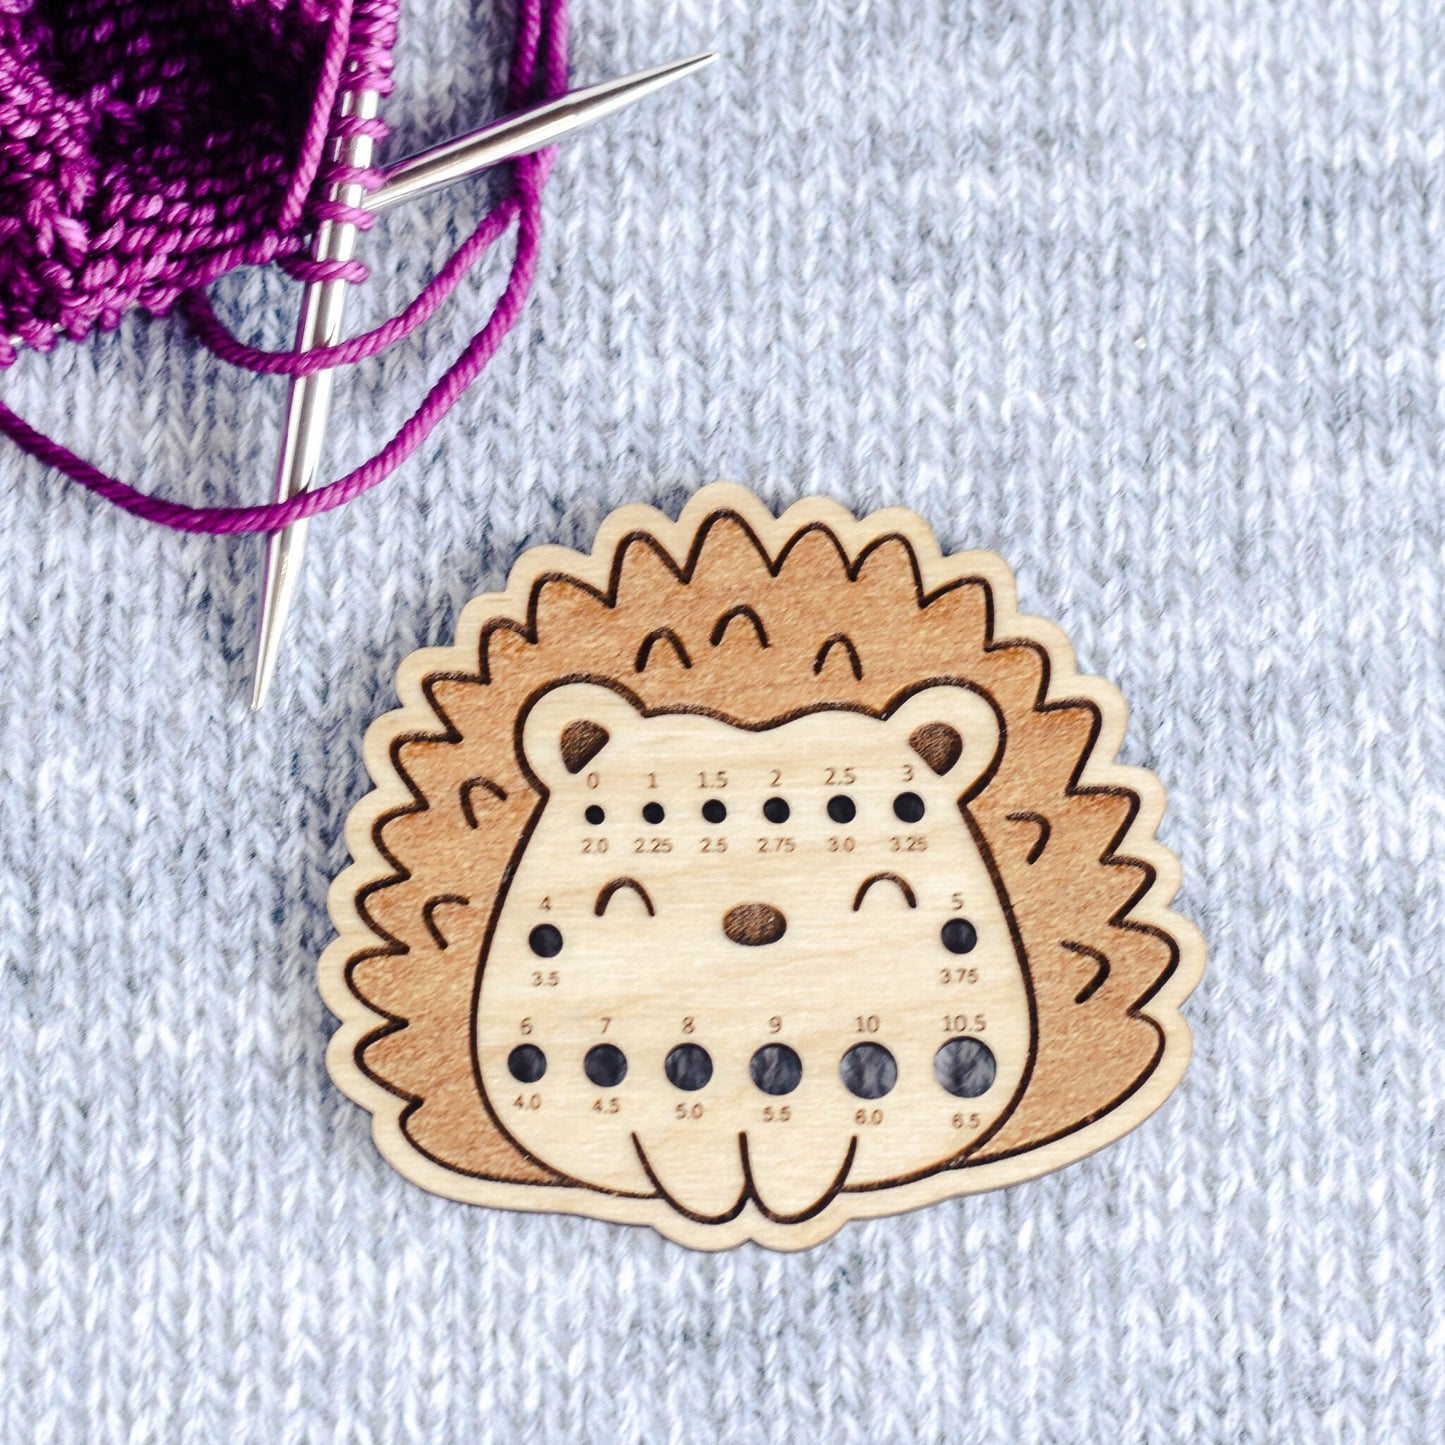 Knitting Needle Gauge - Hedgehog - Wood Needle Gauge, Knitting Tools, Gifts for Knitters, Eco-Friendly Knitting